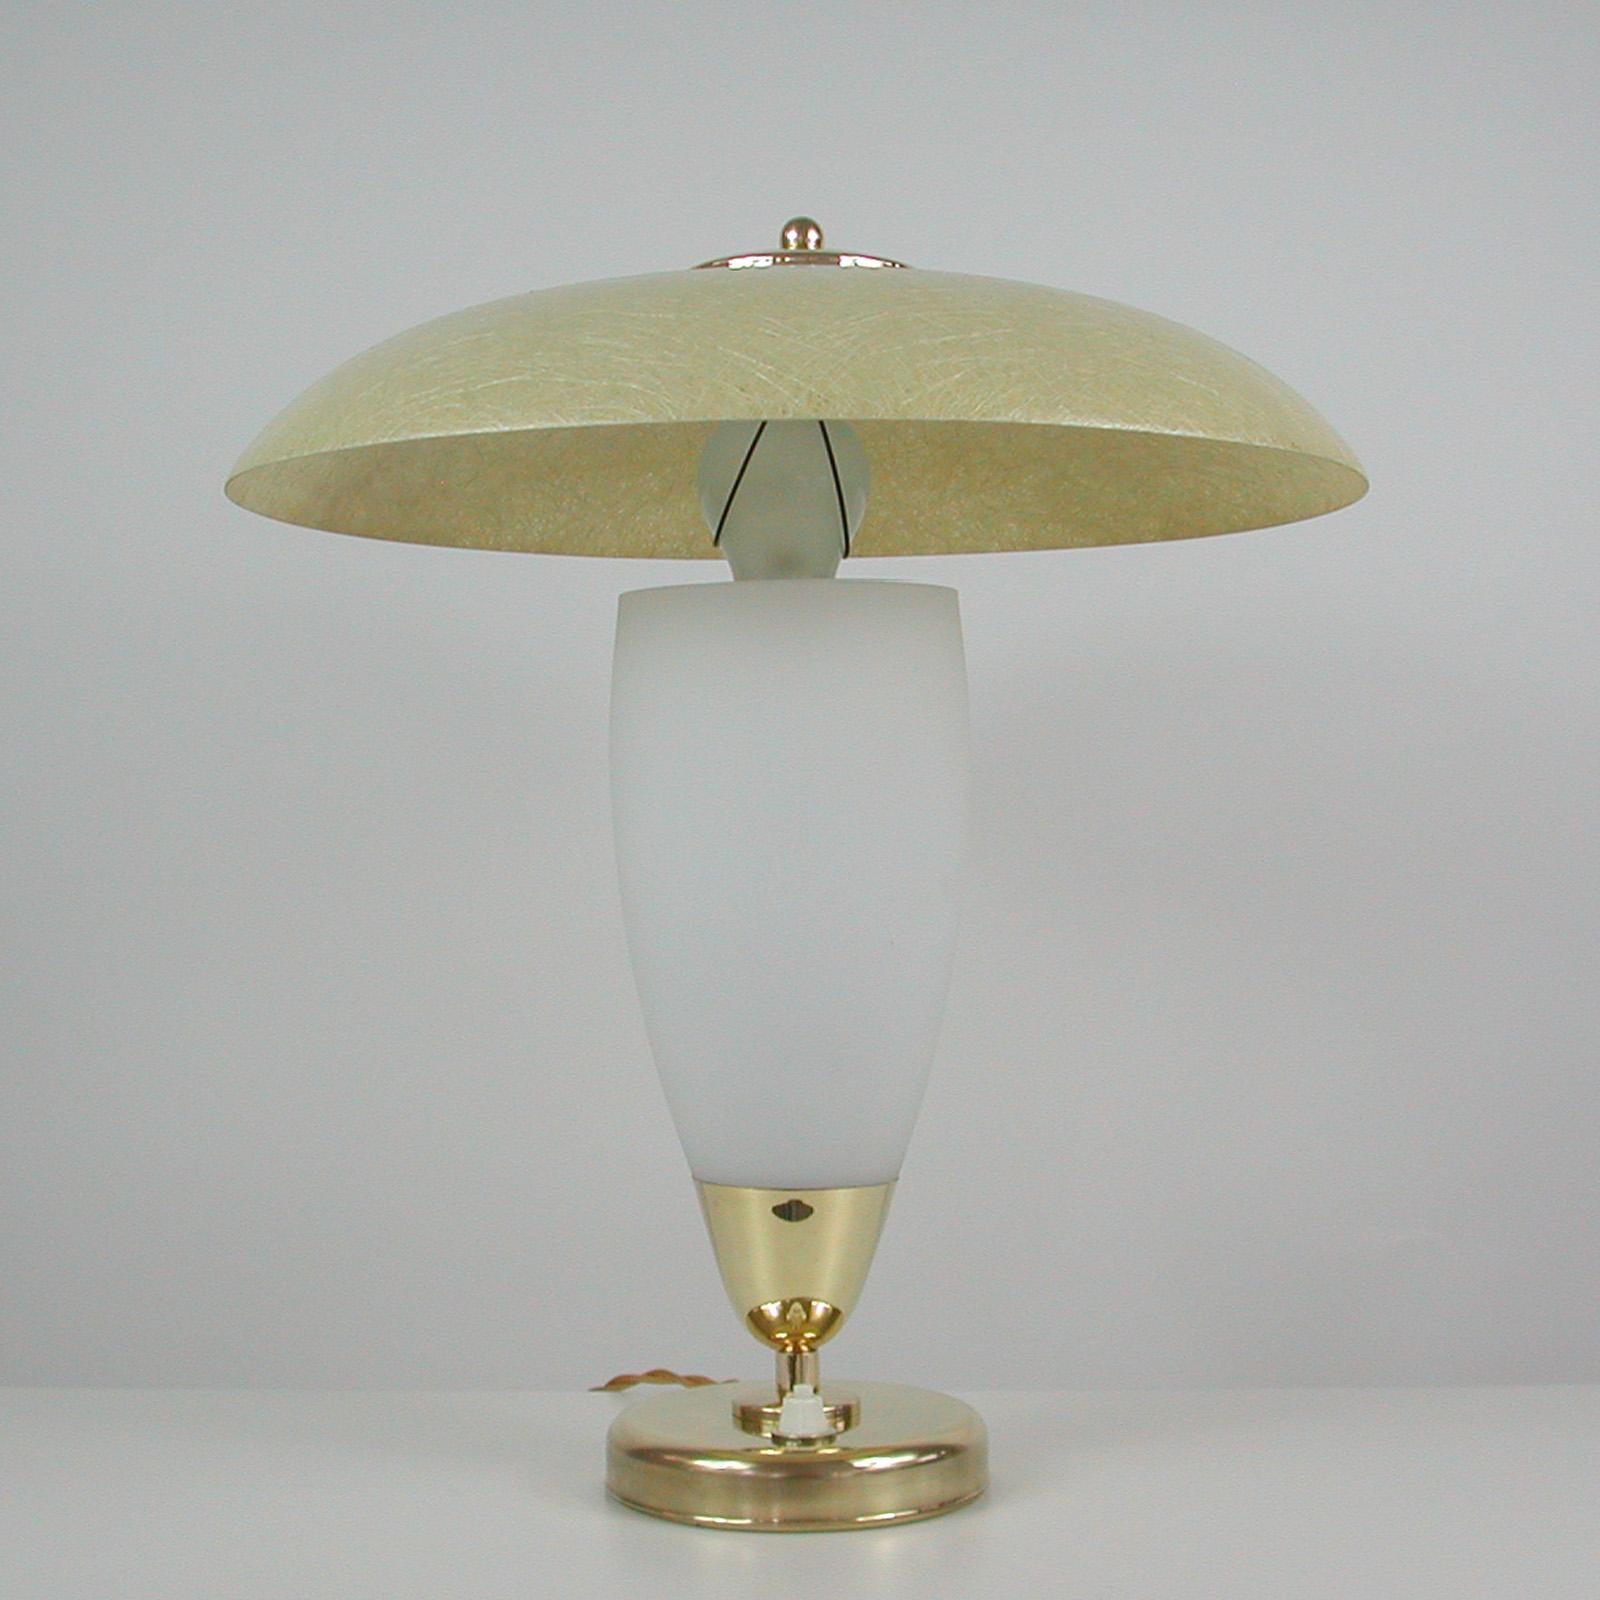 Midcentury Swedish Modern Brass, Opaline and Fiberglass Saucer Table Lamp, 1950s For Sale 4